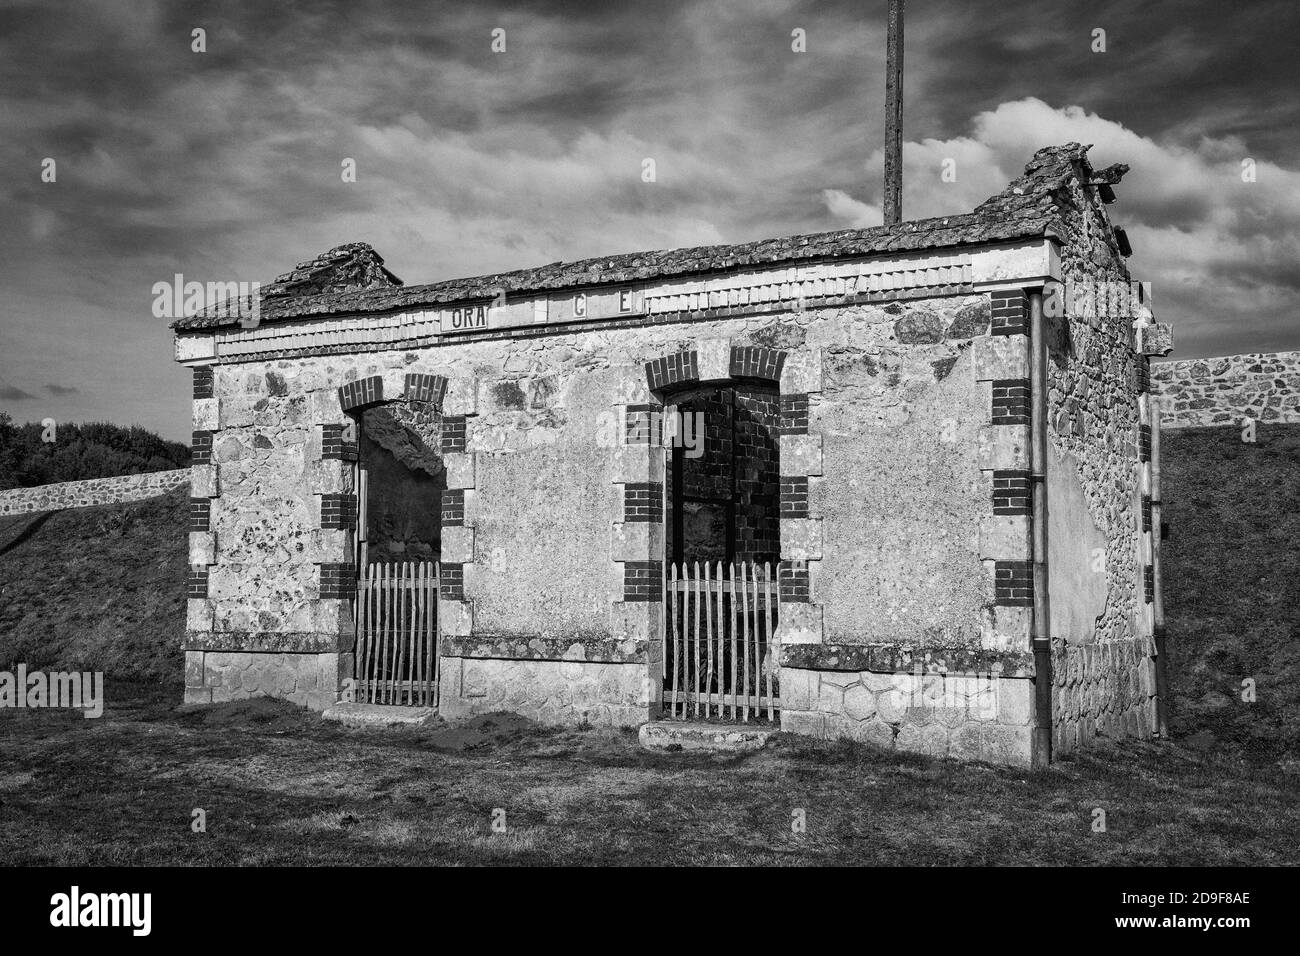 Oradour sur glane france Black and White Stock Photos & Images - Alamy